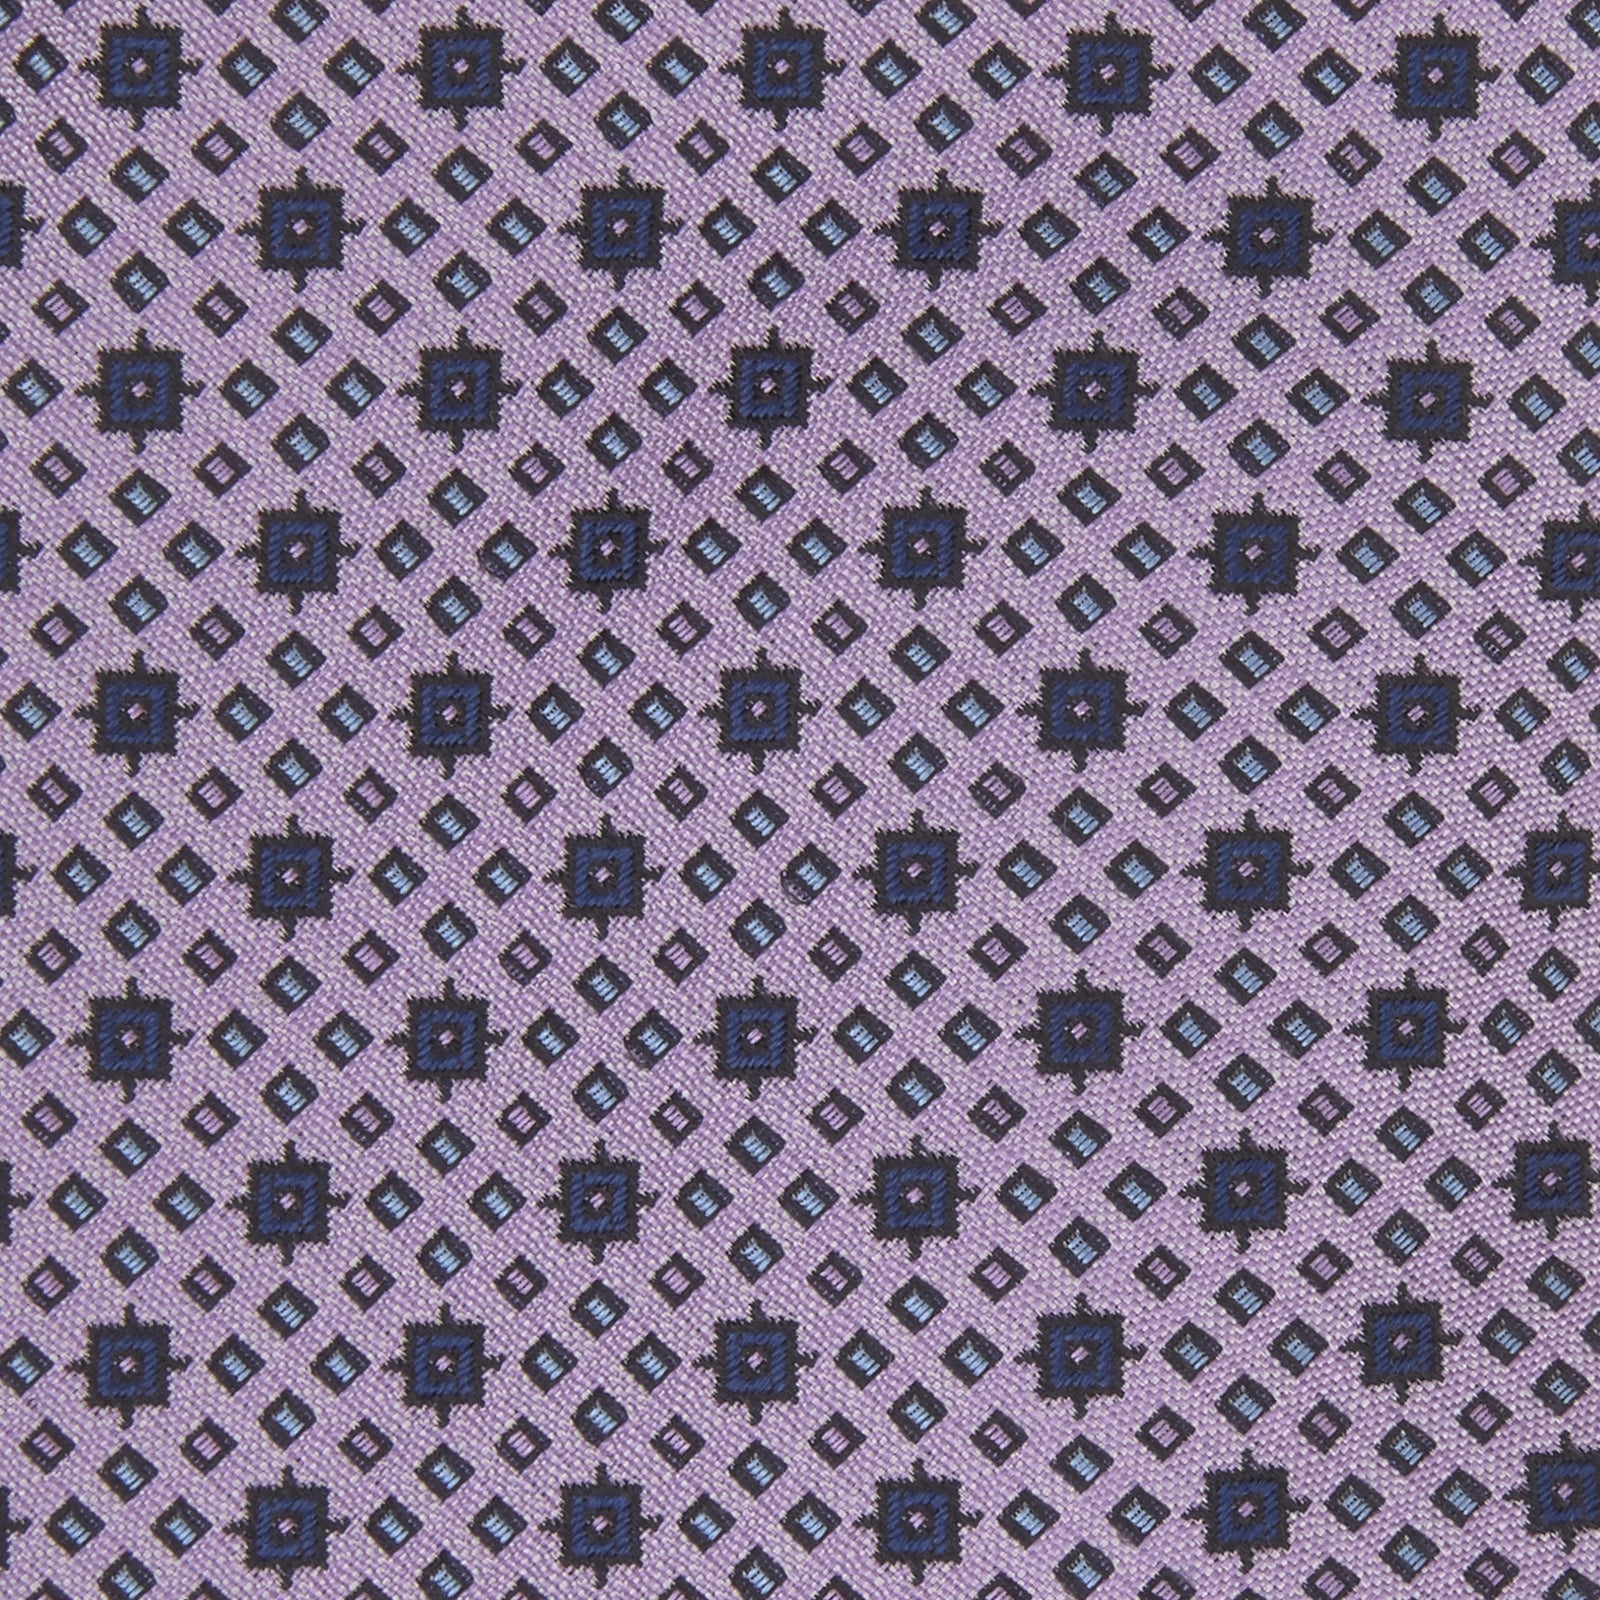 Lilac Geometric Silk Tie